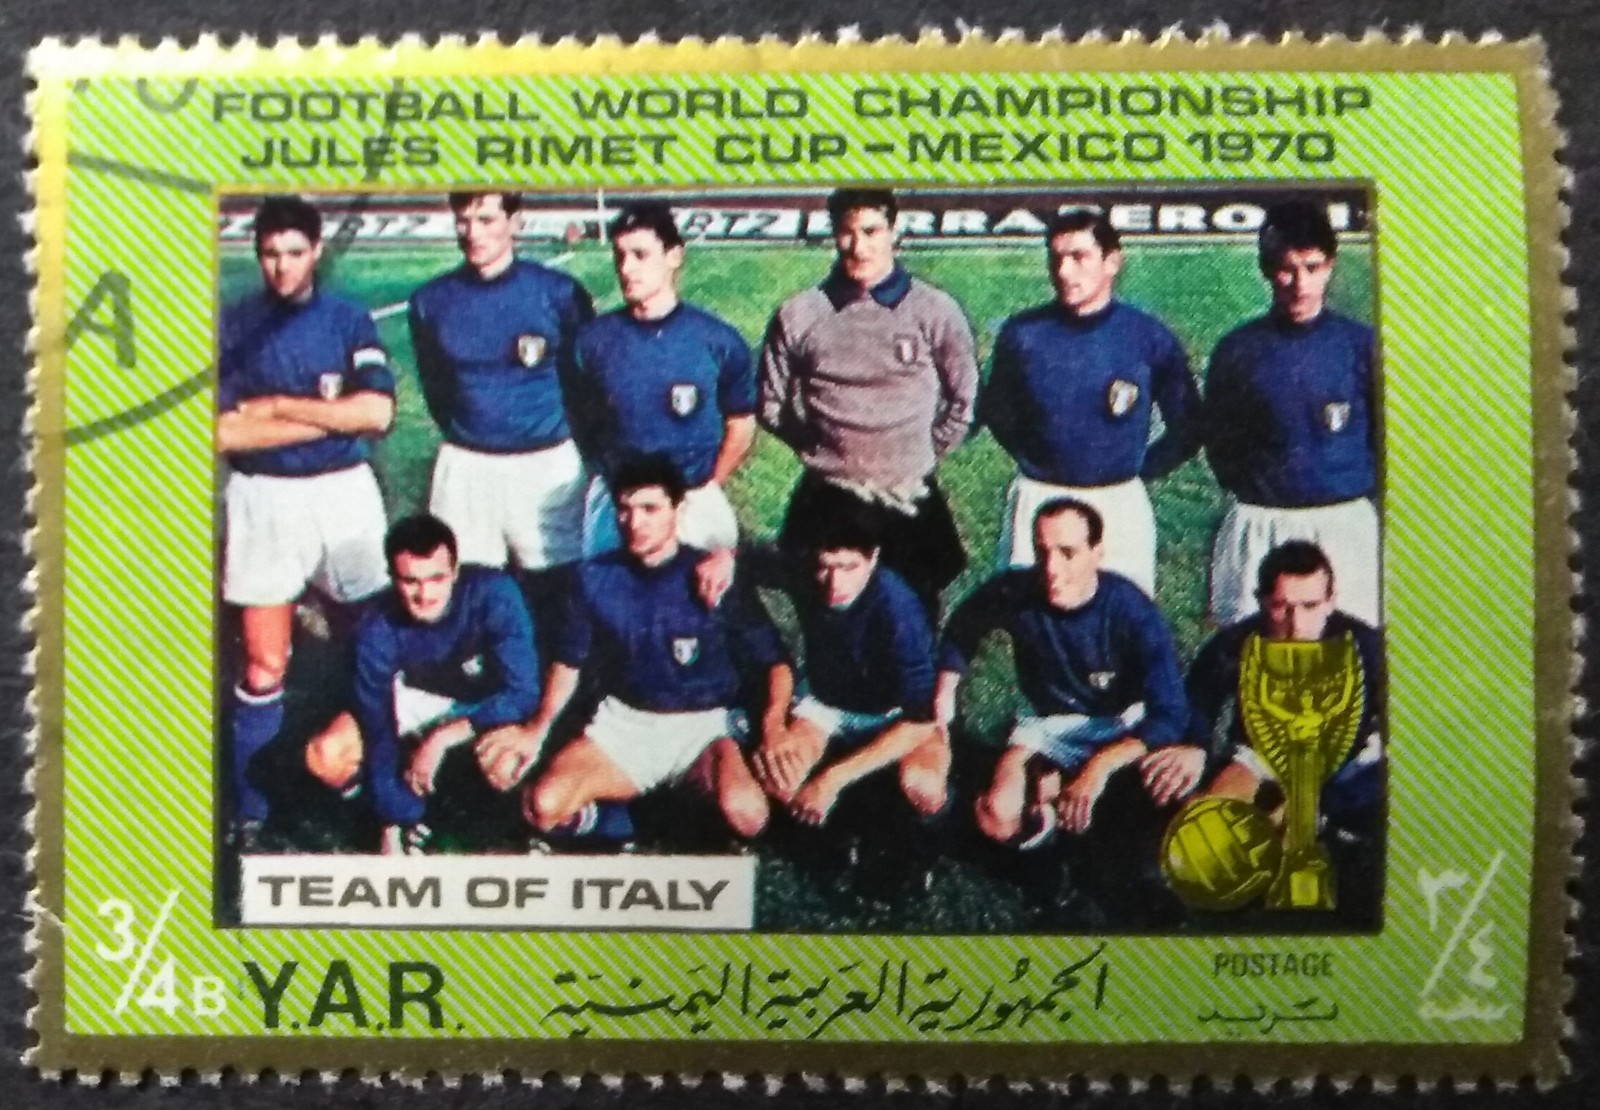 Mexico 70 Team Italy Yemen Postage Stamp - $0.99